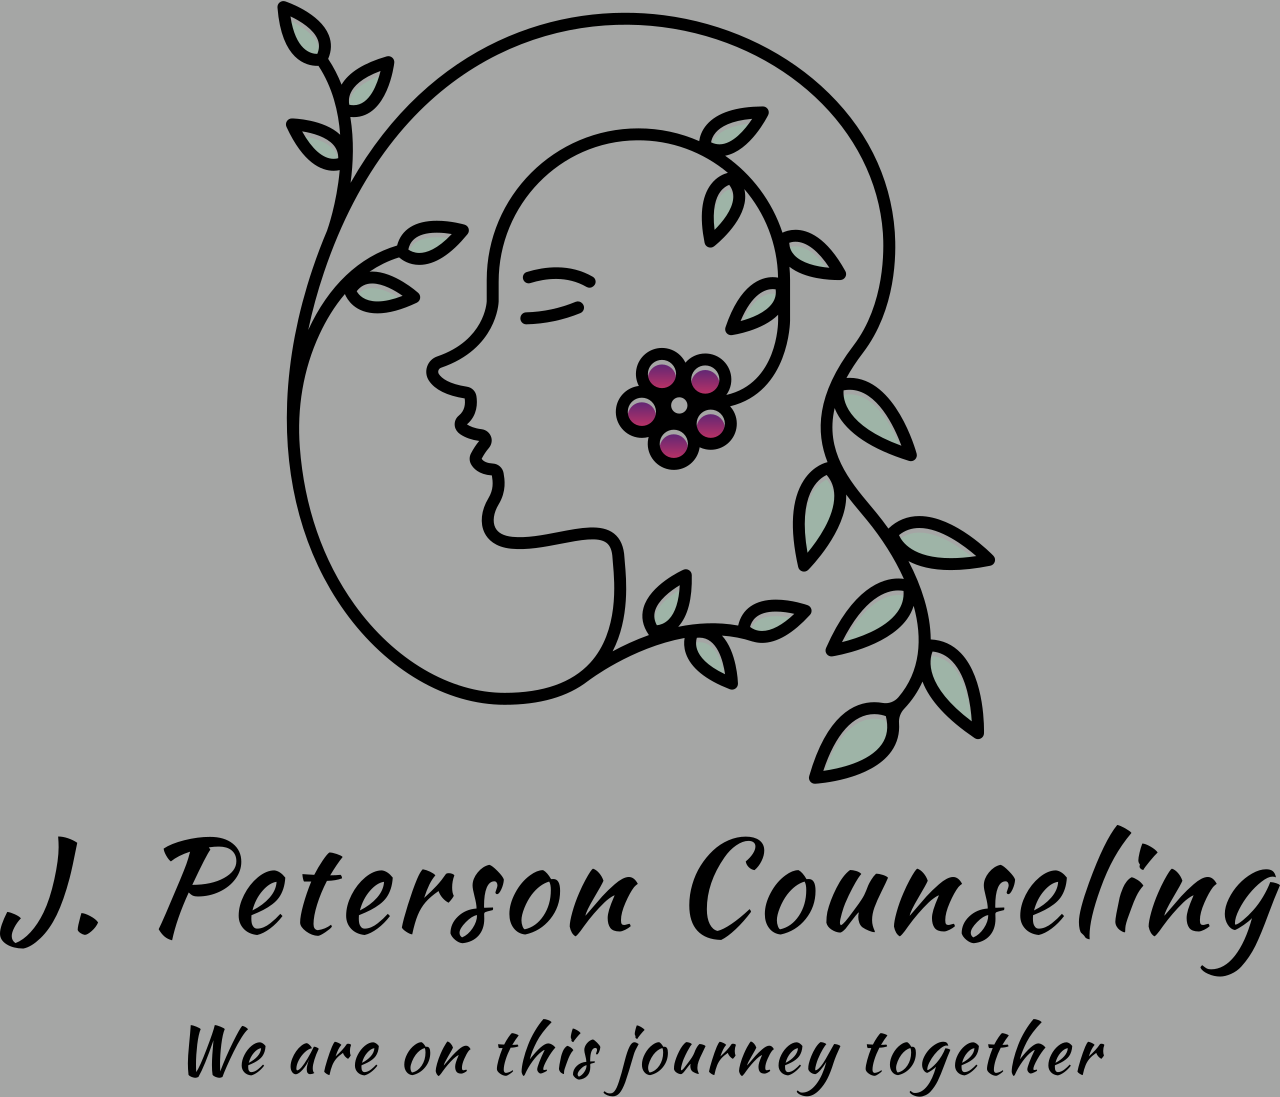 J. Peterson Counseling 's logo